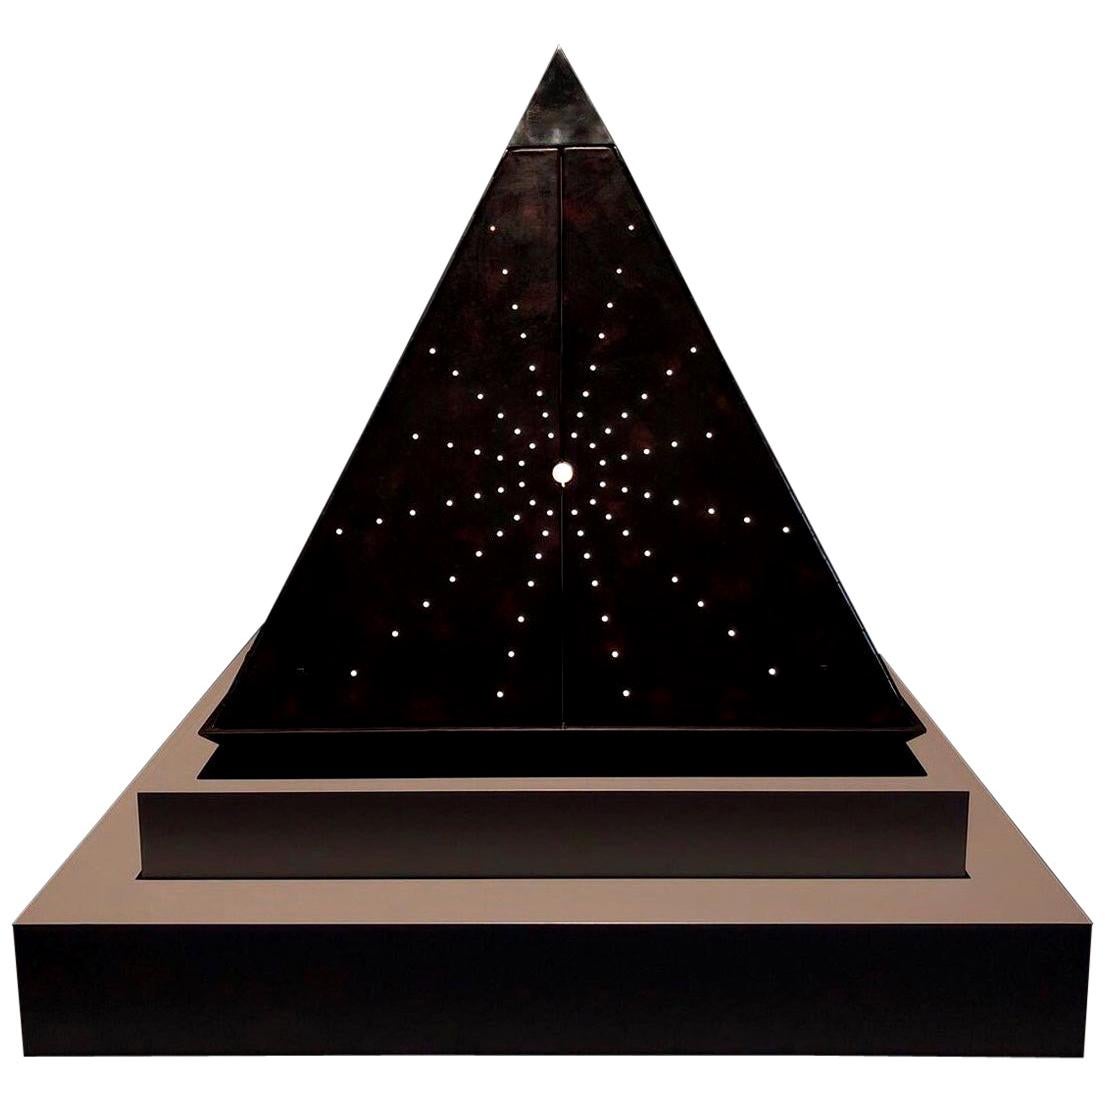 Oscar Tusquets - Pyramid contemporain en cuir étoilé - Édition limitée en vente